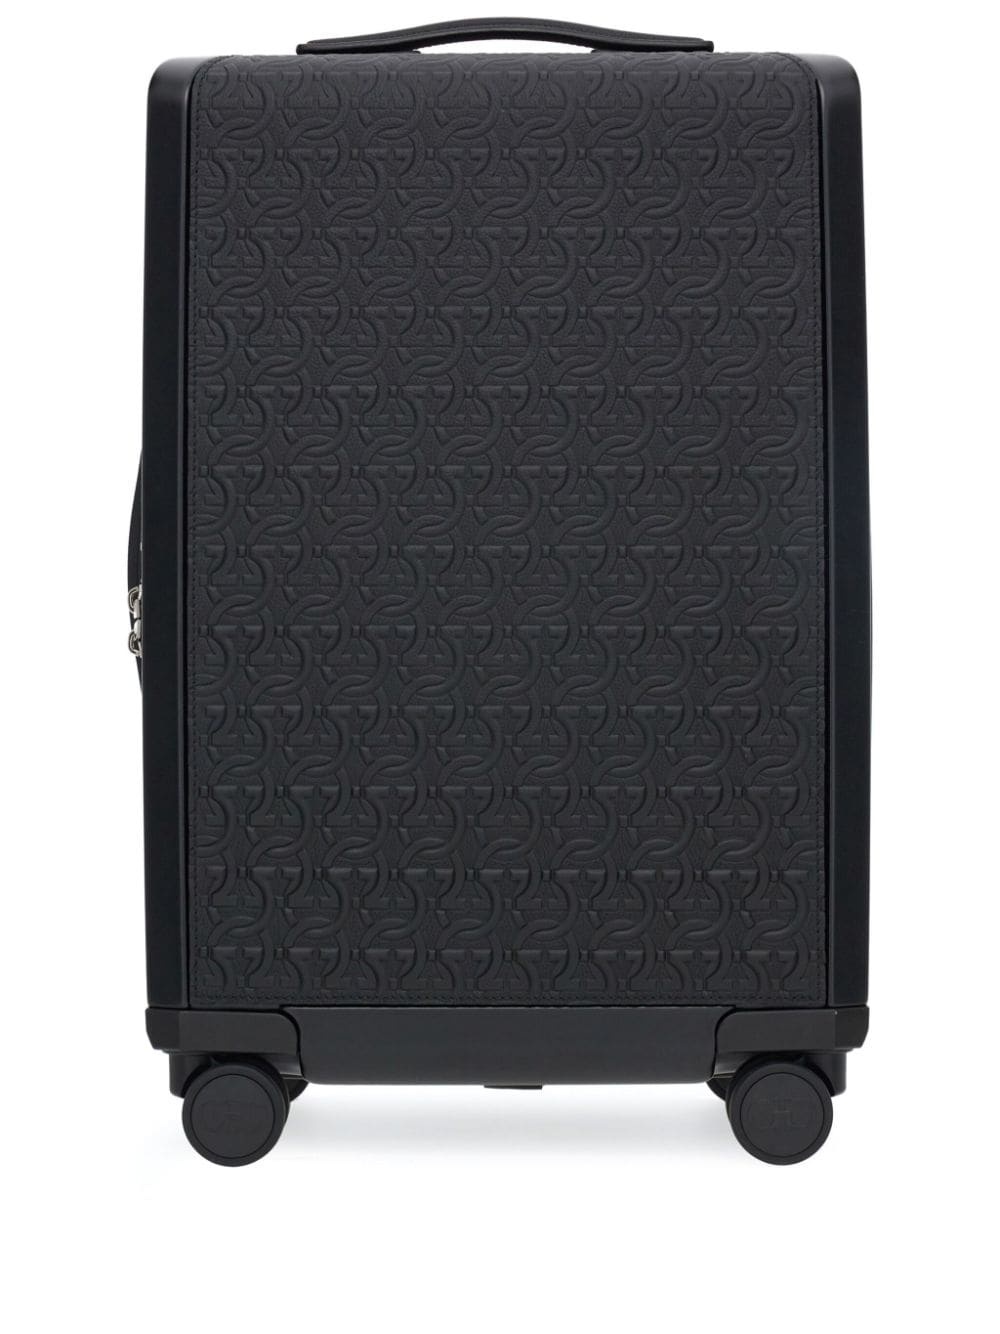 Gancio embossed pattern leather luggage - 1